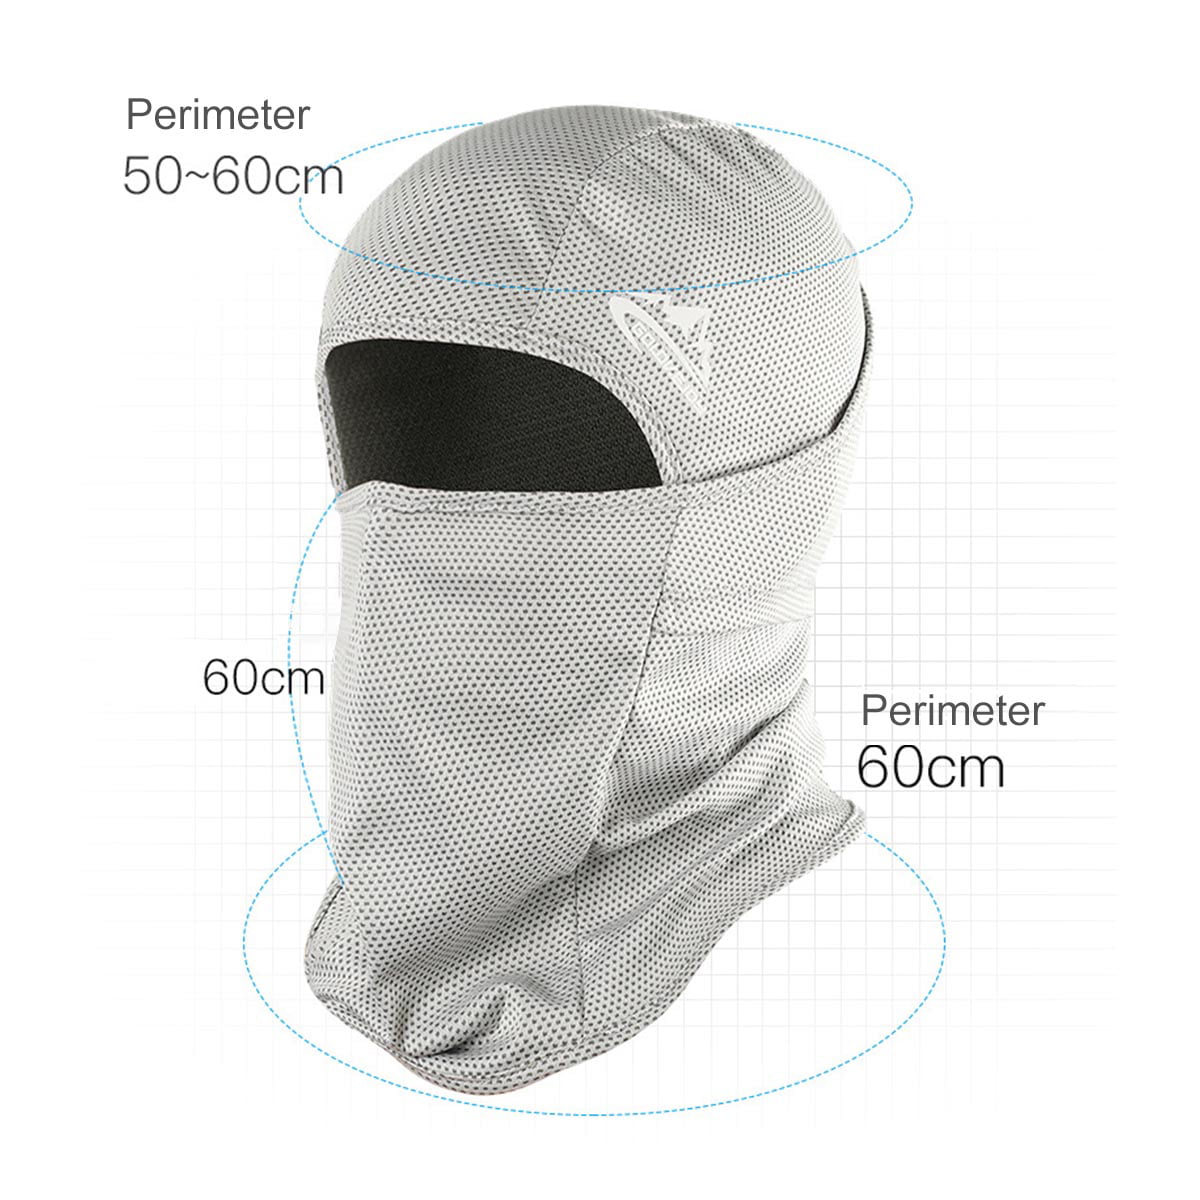 Details about   Tactical Balaclava Face Mask UV Protection Masks for Men Women Ski Sun Hood USA 